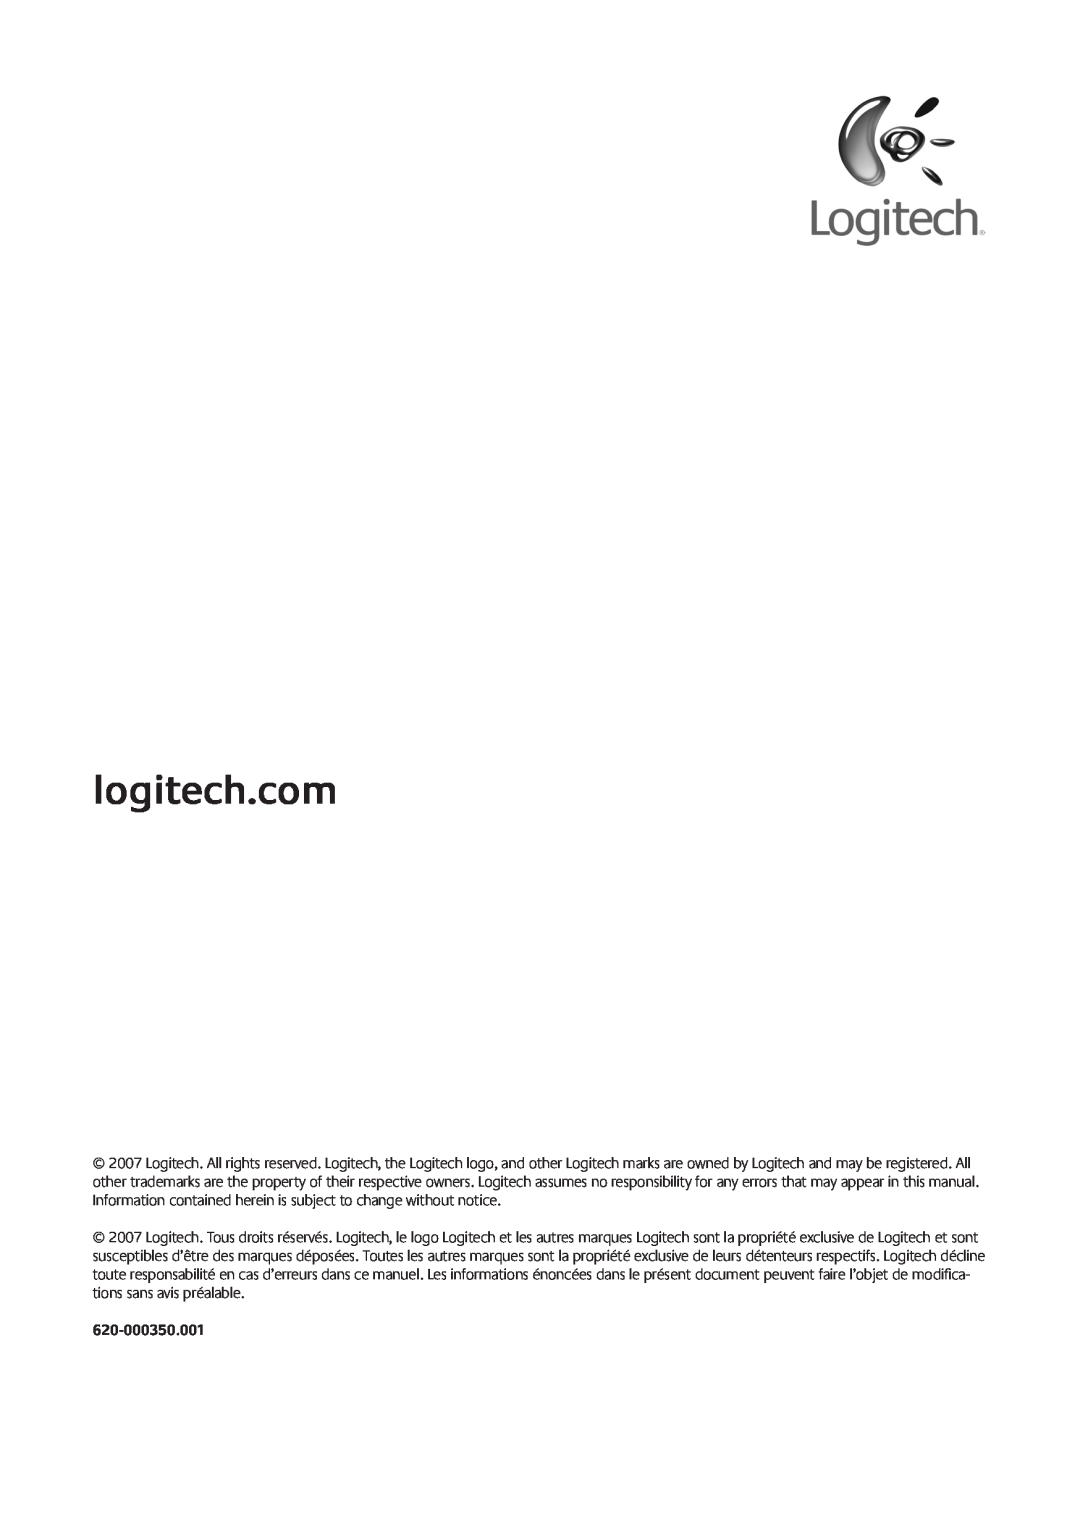 Logitech Ft manual logitech.com, 620-000350.001 